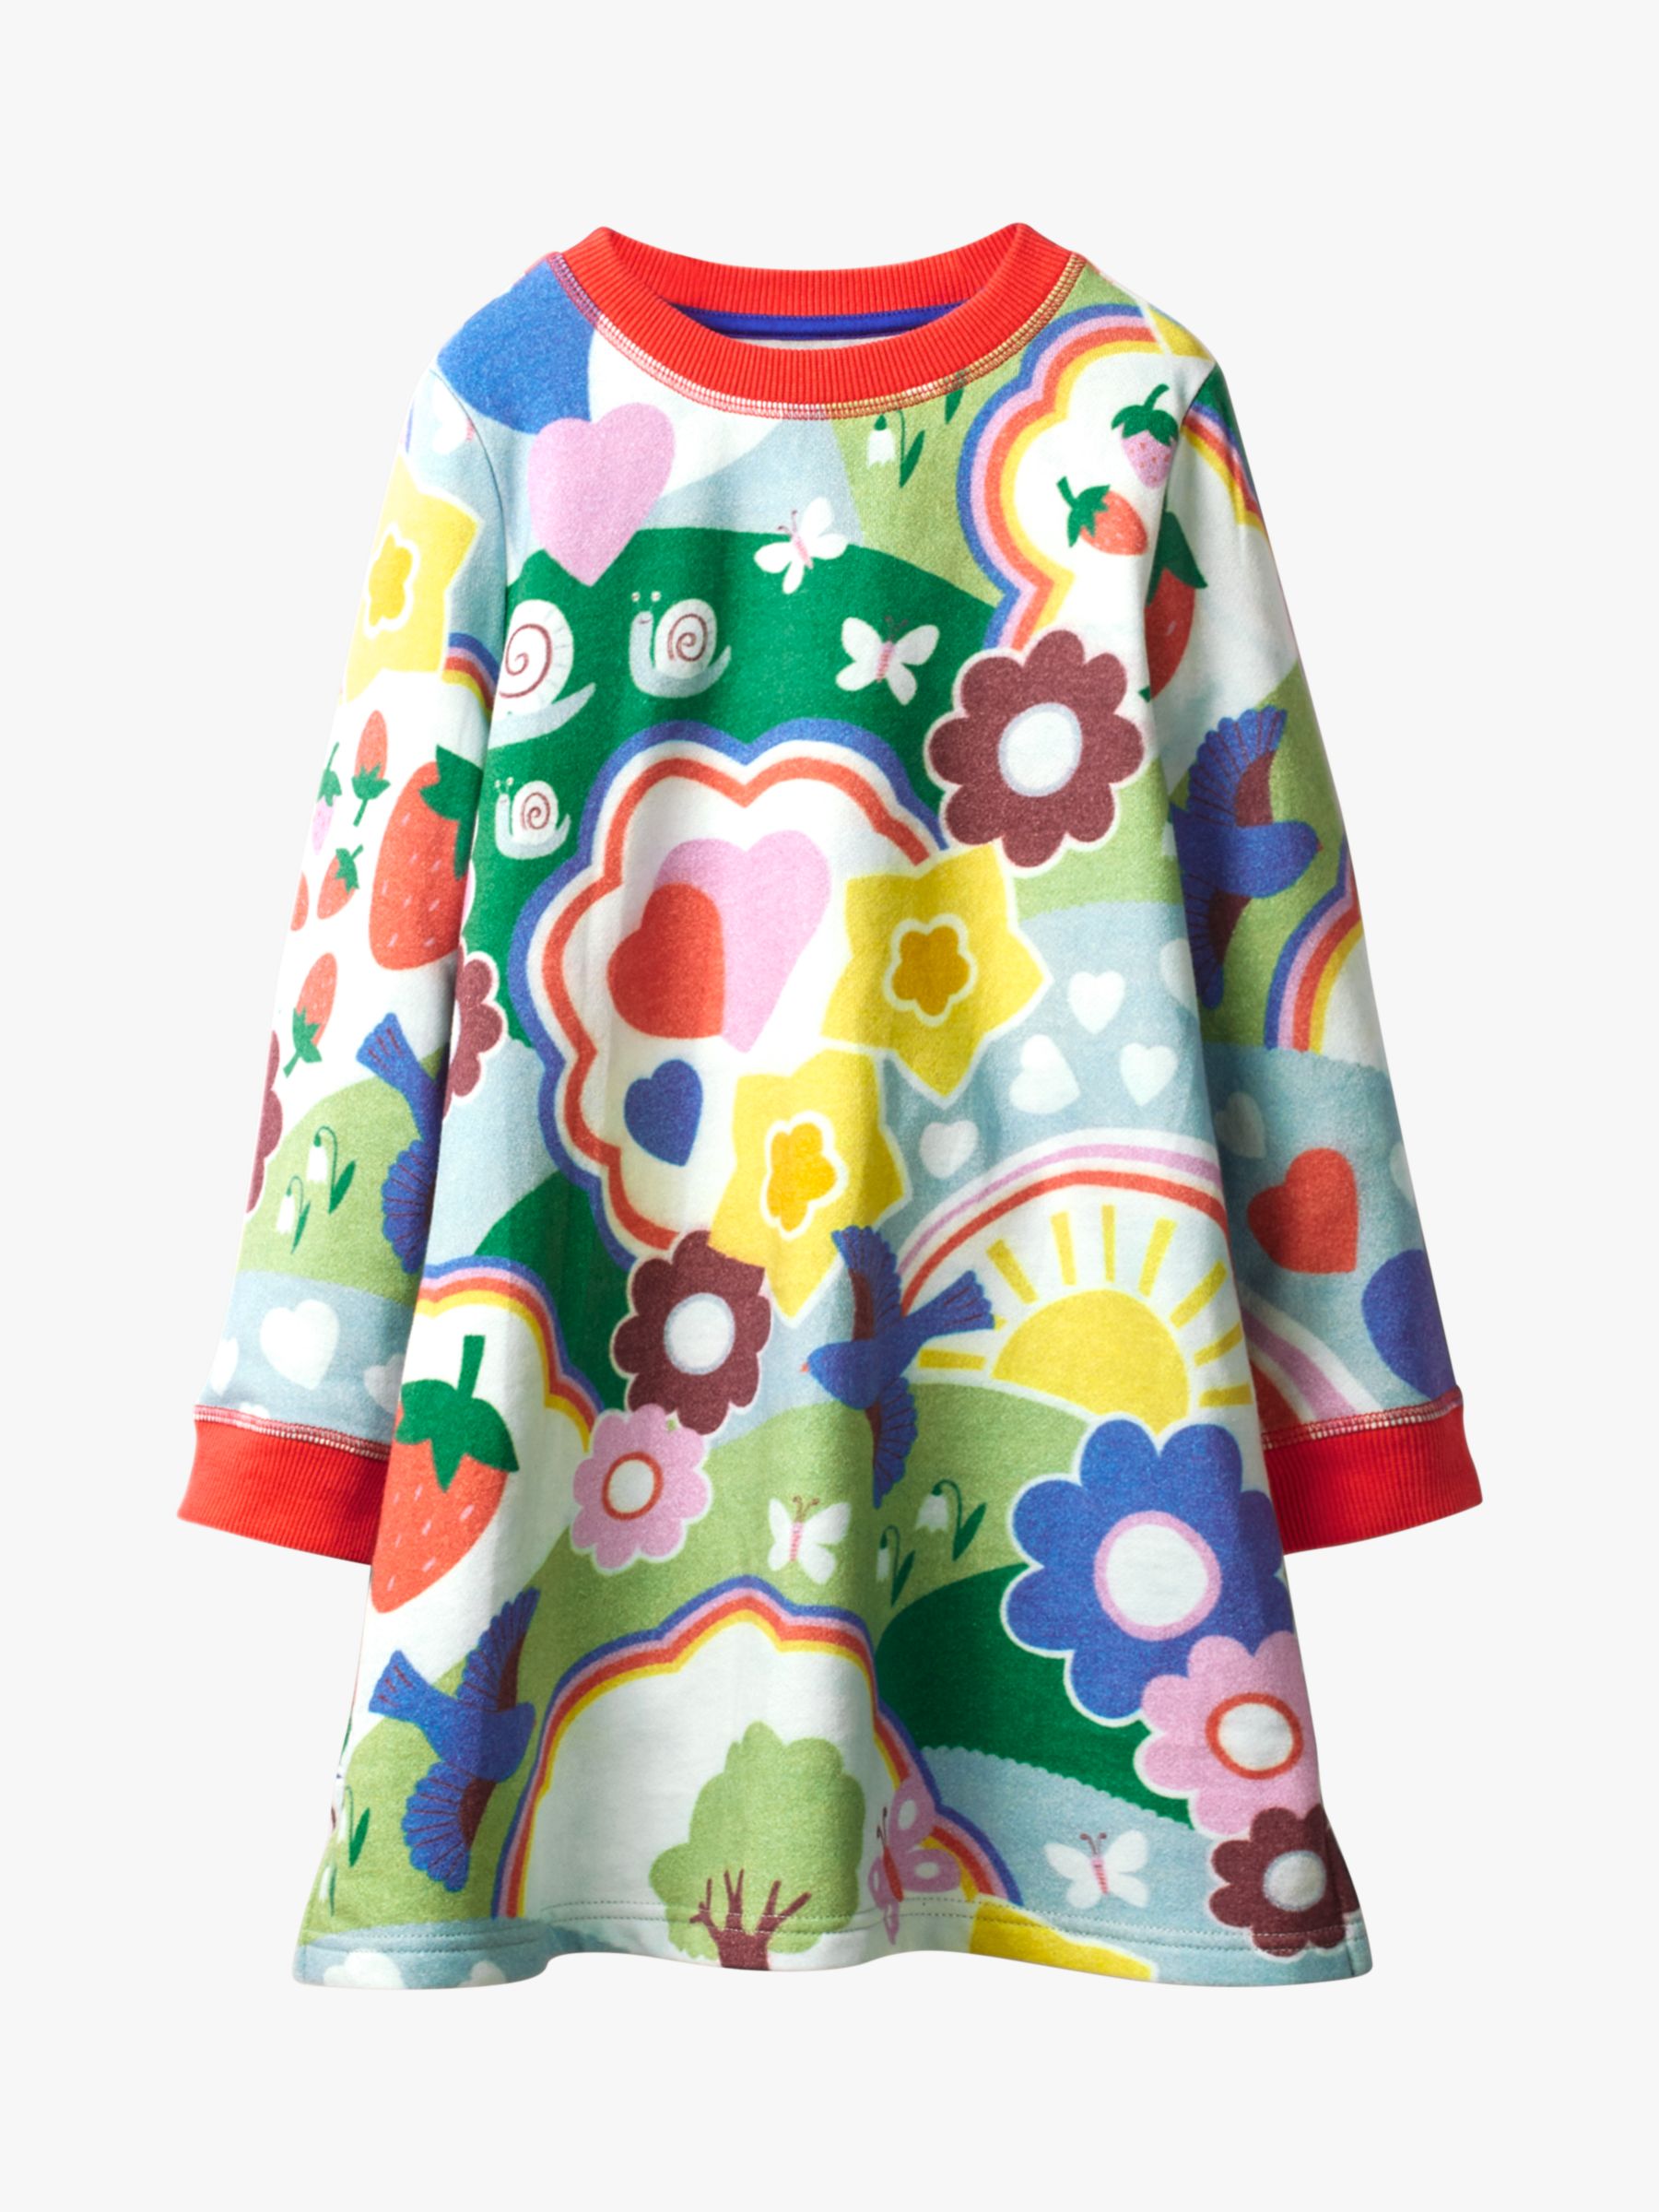 Mini Boden Girls Colourful Pocket Summer Tunic Dress Cherries Print 2-12 Years 